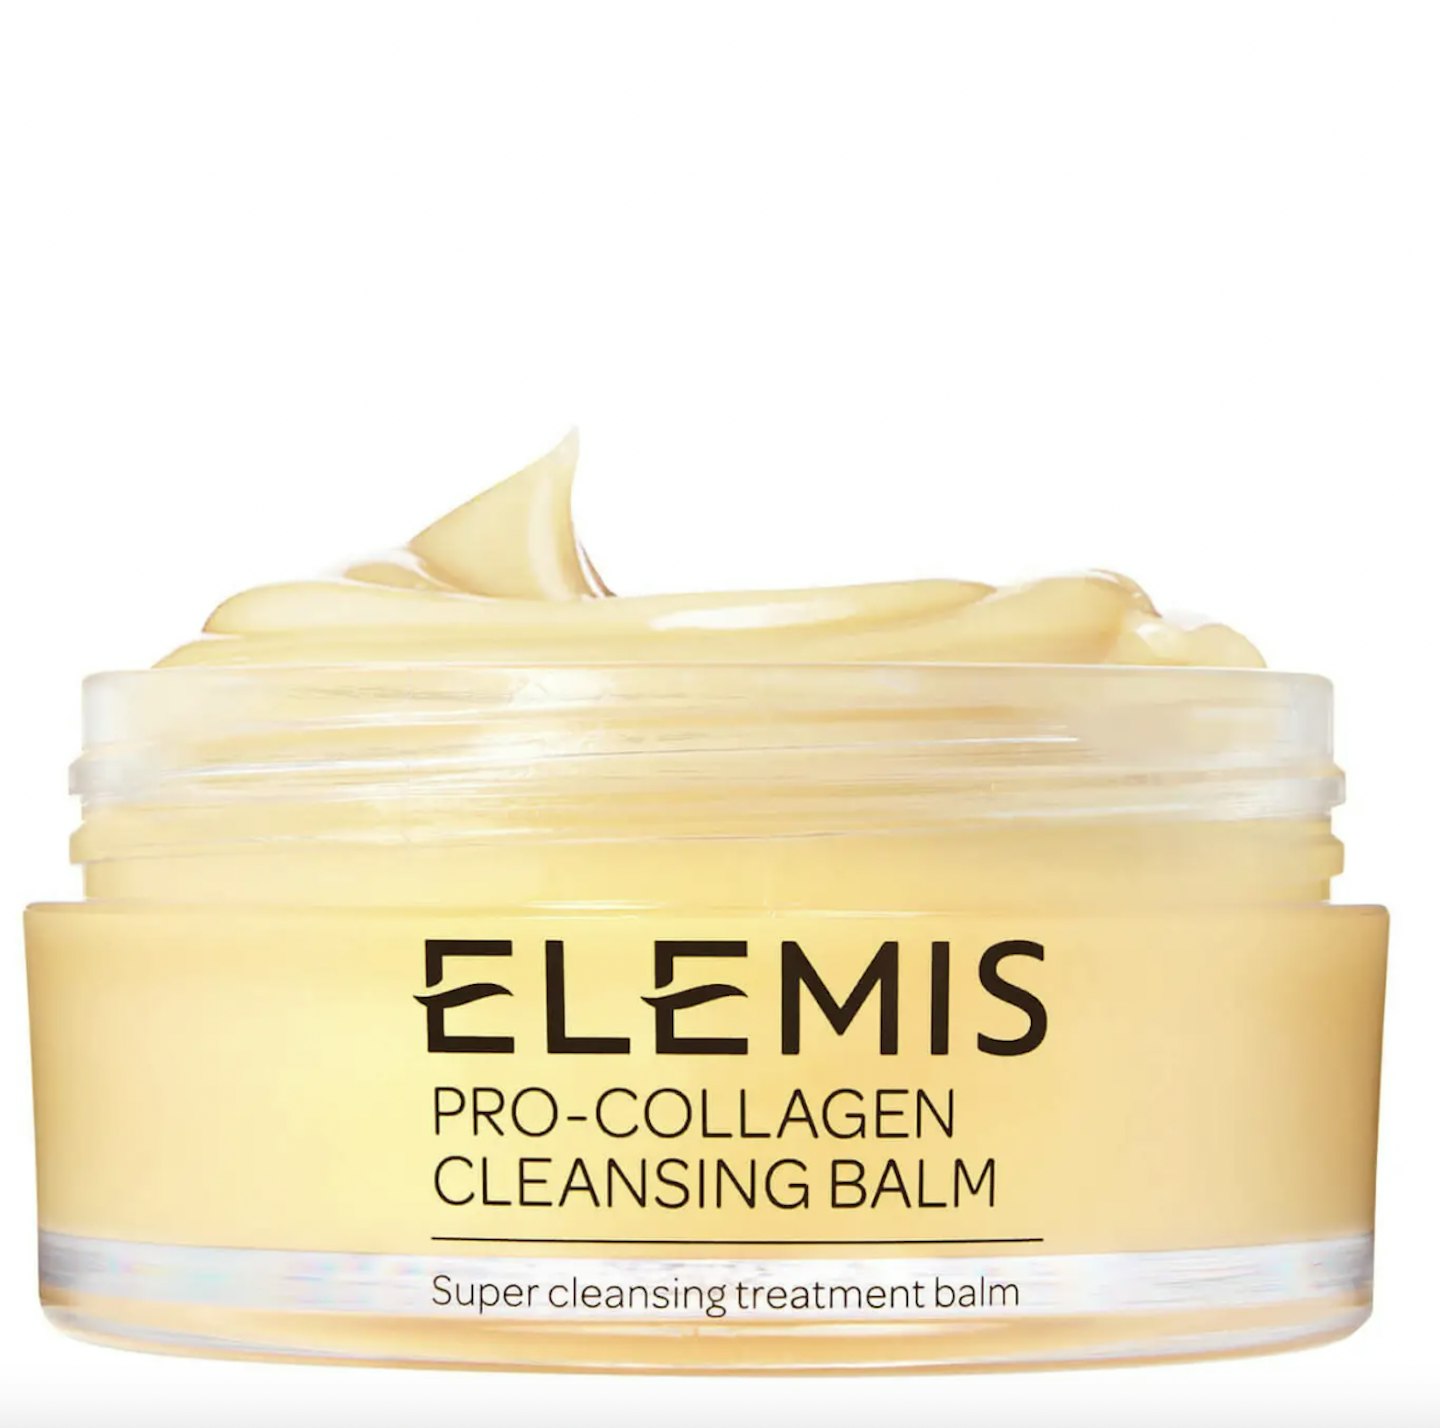 Elemis Pro-Collagen Cleansing Balm, £44